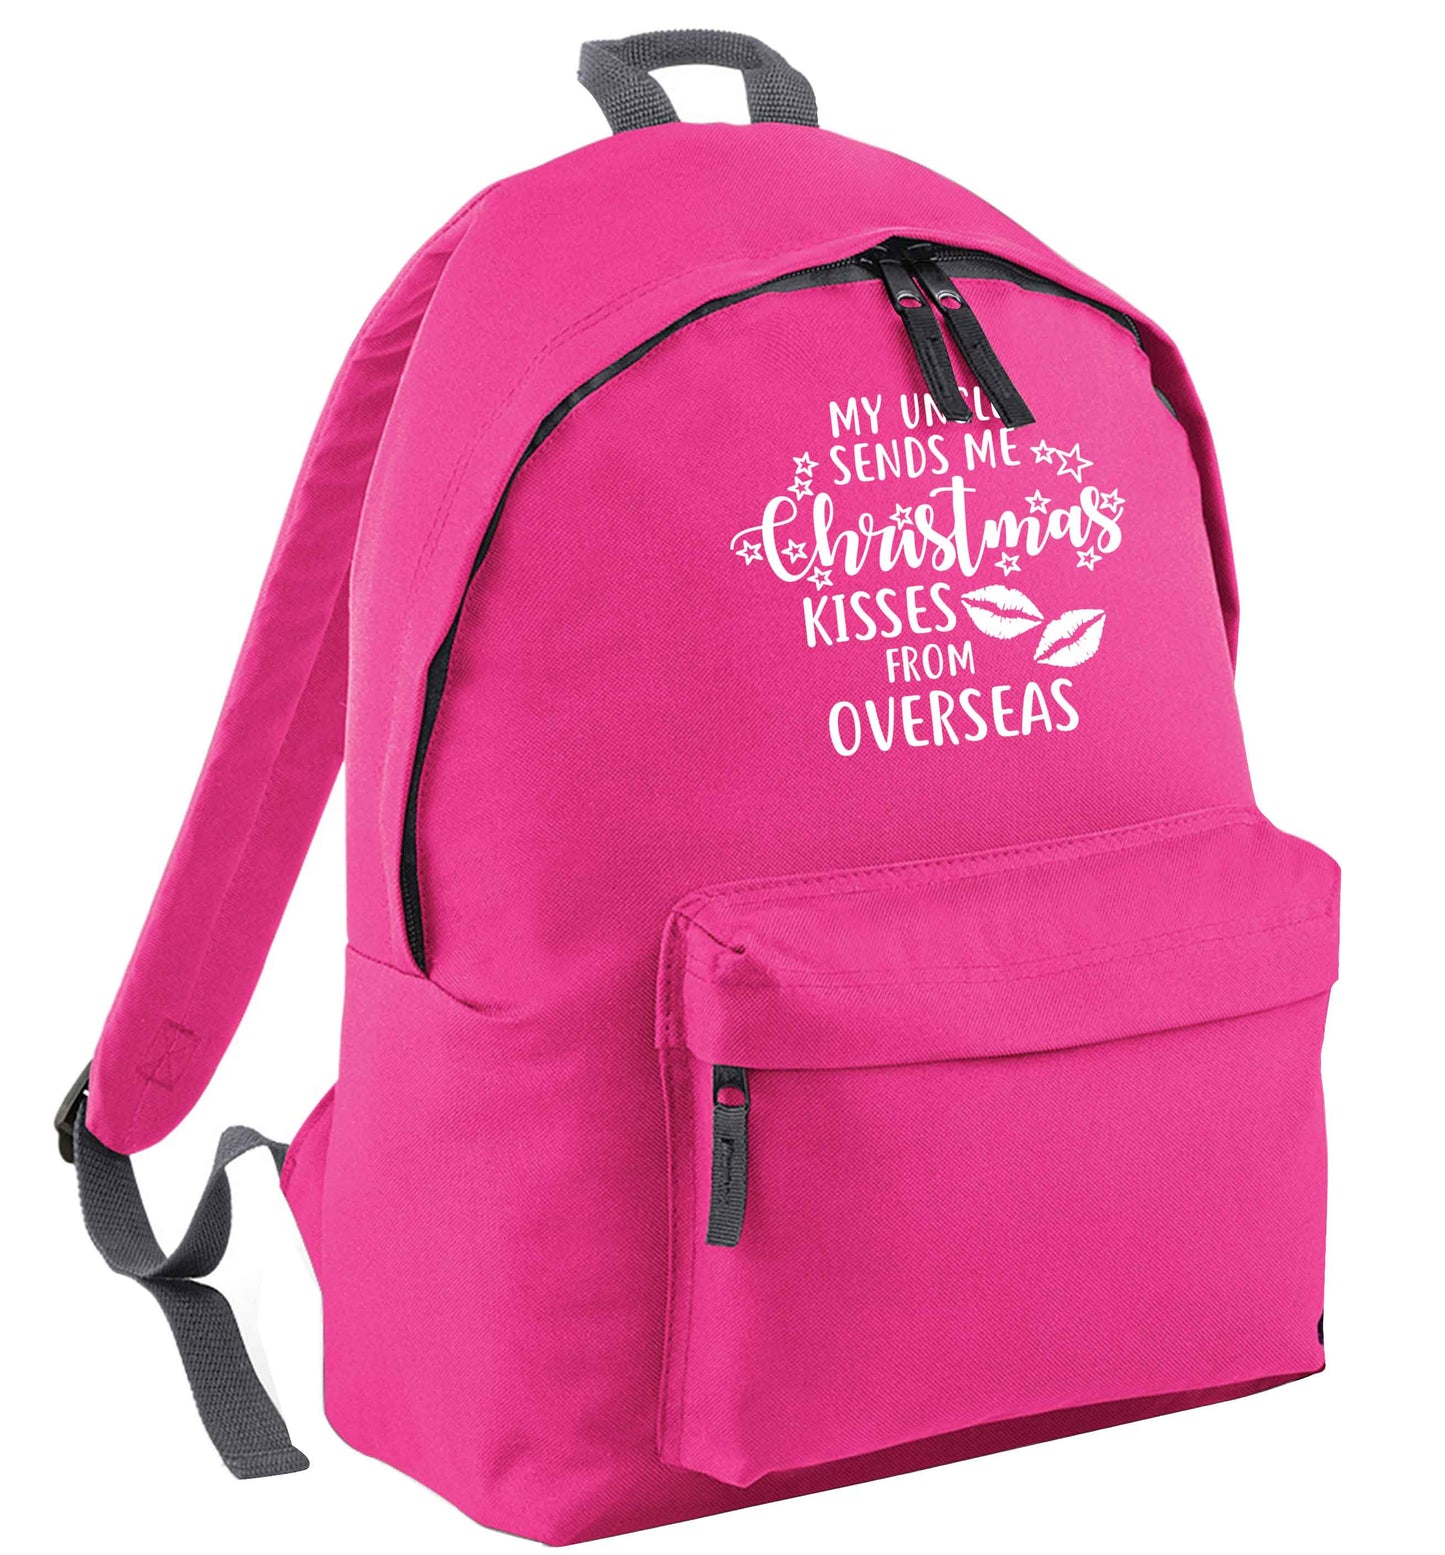 Brother Christmas Kisses Overseas | Children's backpack